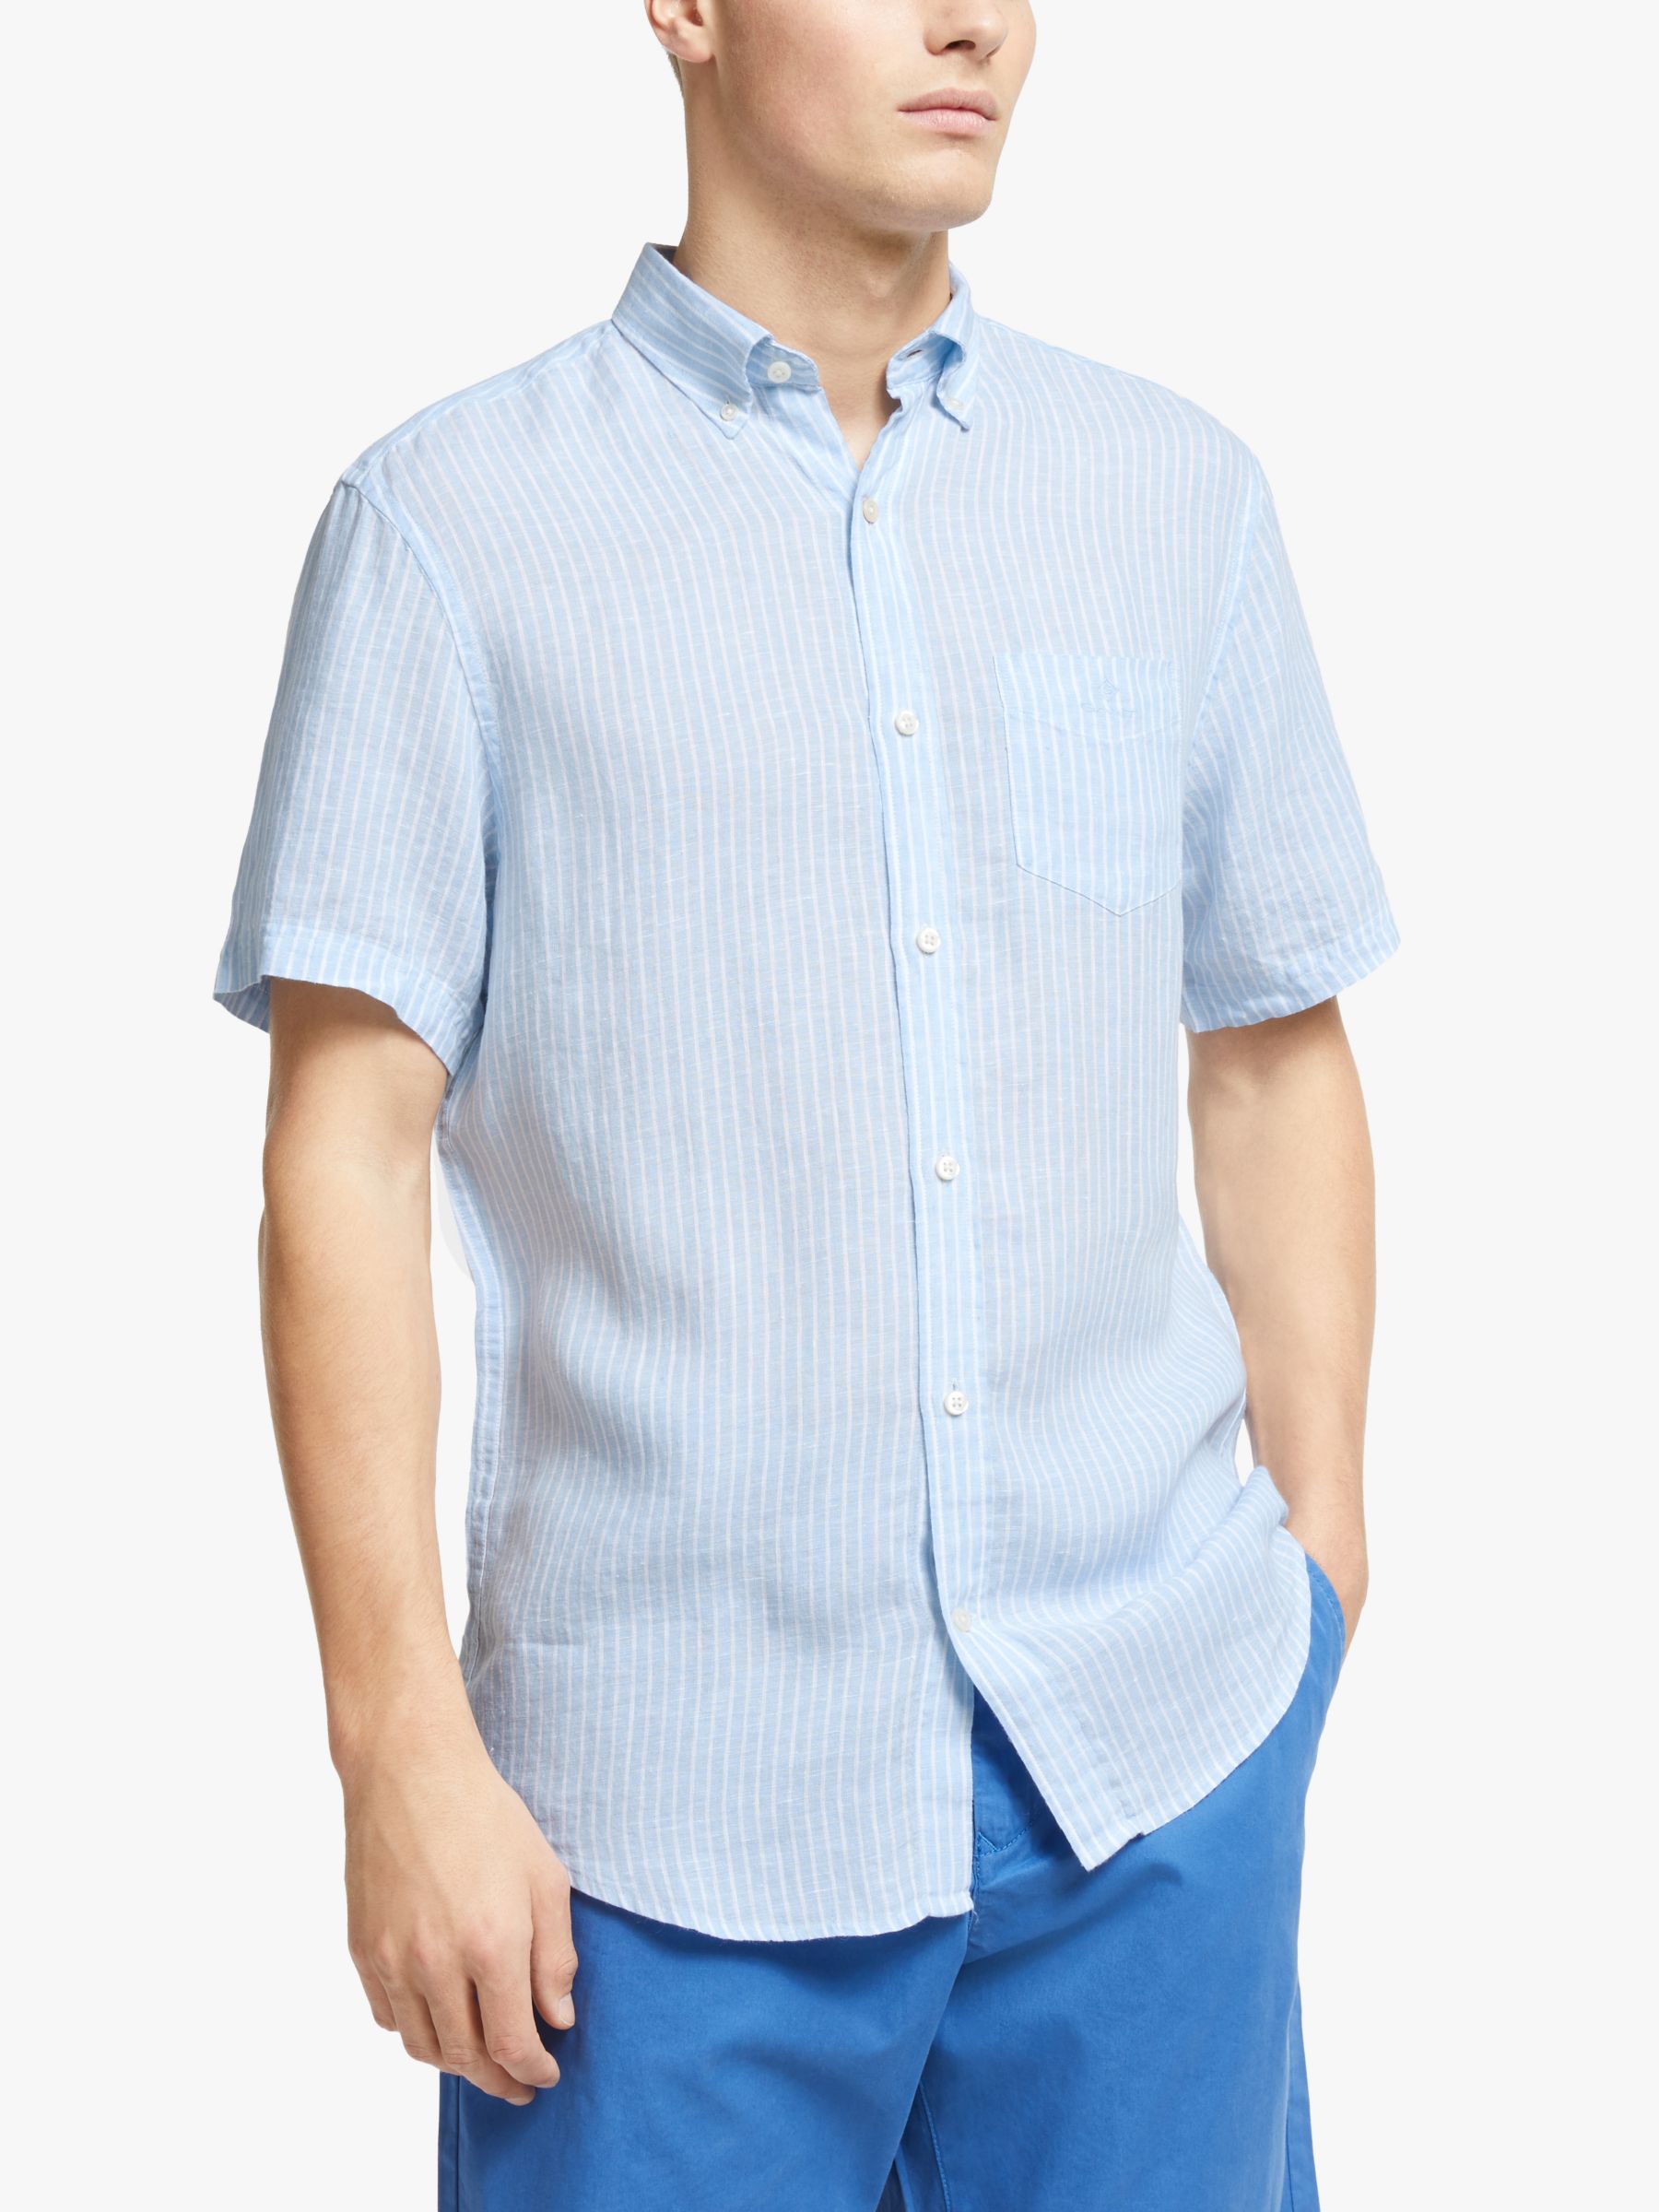 GANT Stripe Short Sleeve Linen Shirt, Pale Blue